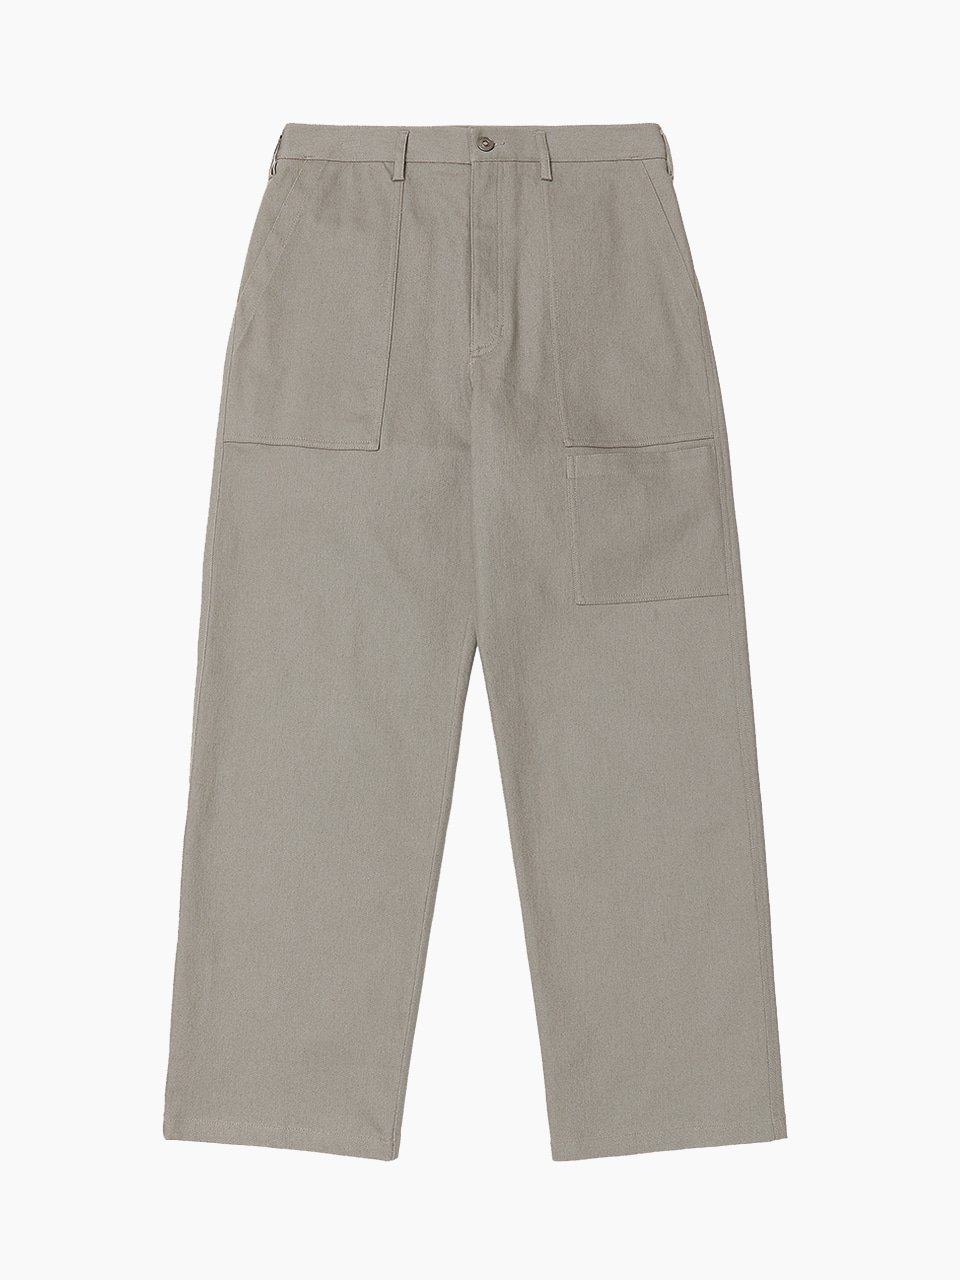 Cation Cotton Fatigue Pants (Gray)